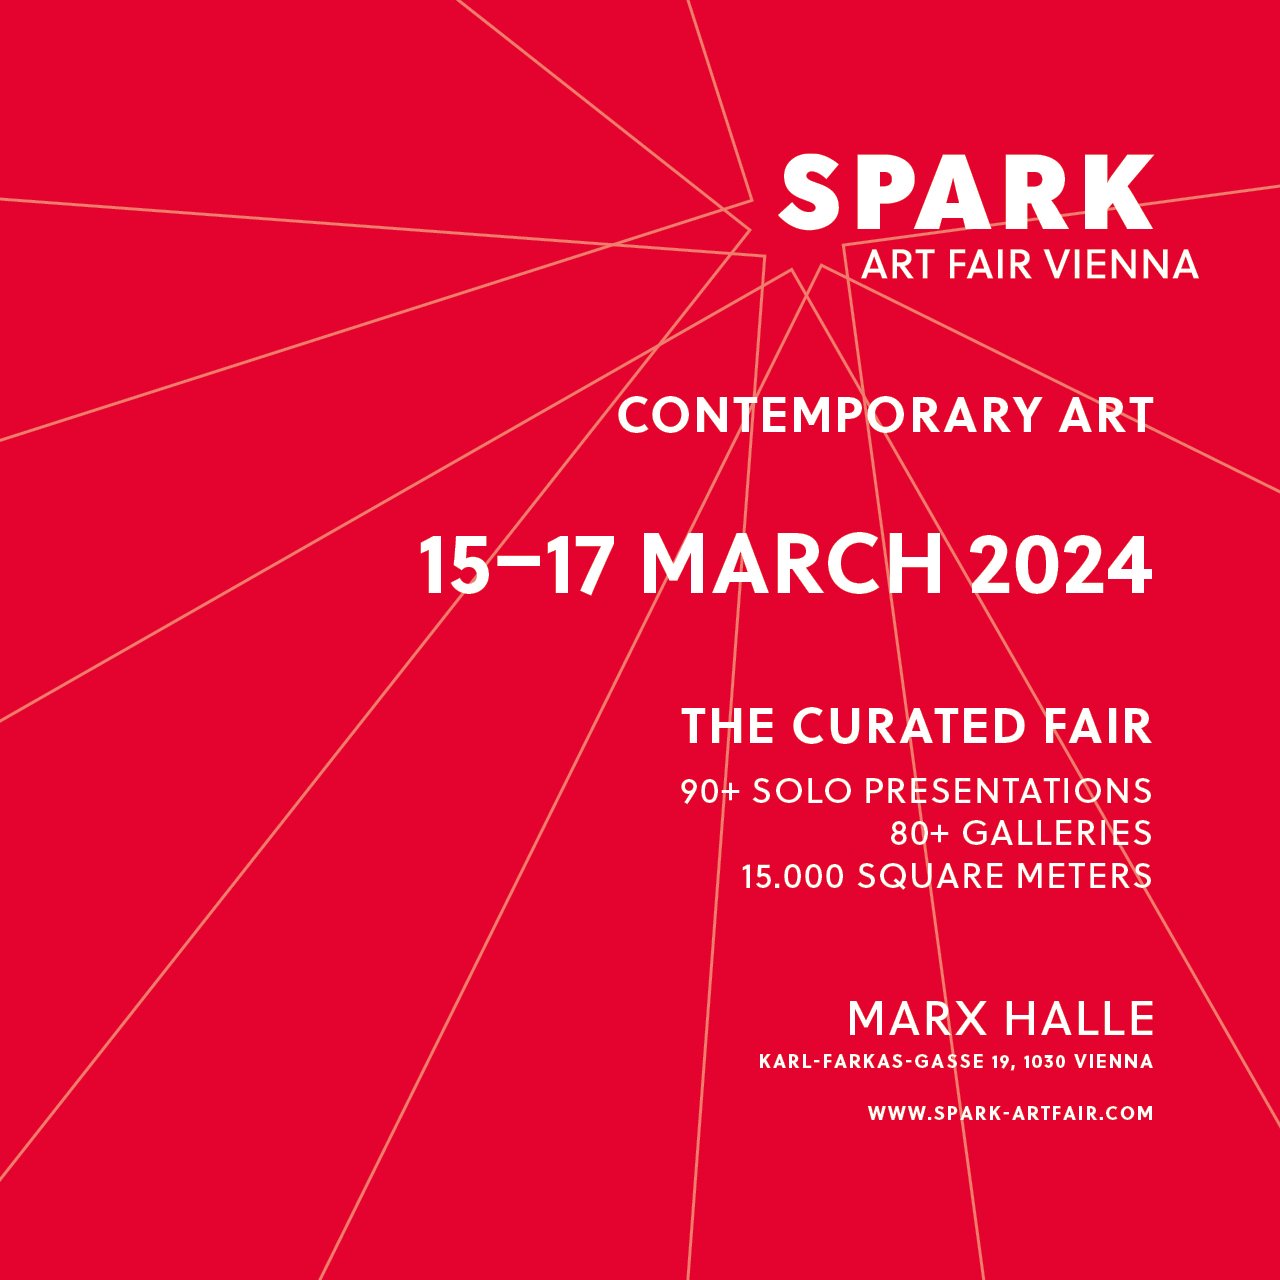 Spark Art Fair Vienna 2024 © Spark Art Fair Vienna 2024